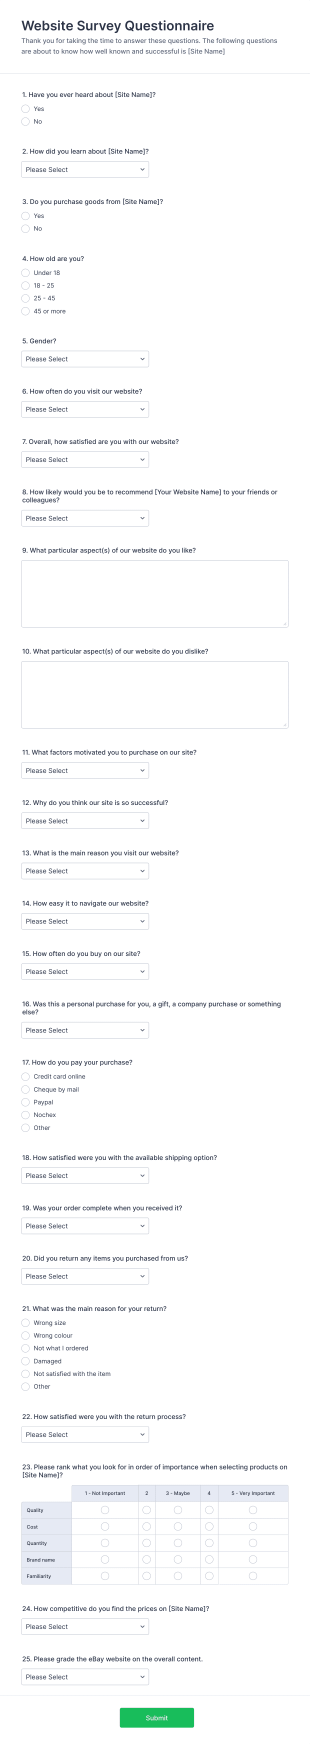 Website Questionnaire Form Template